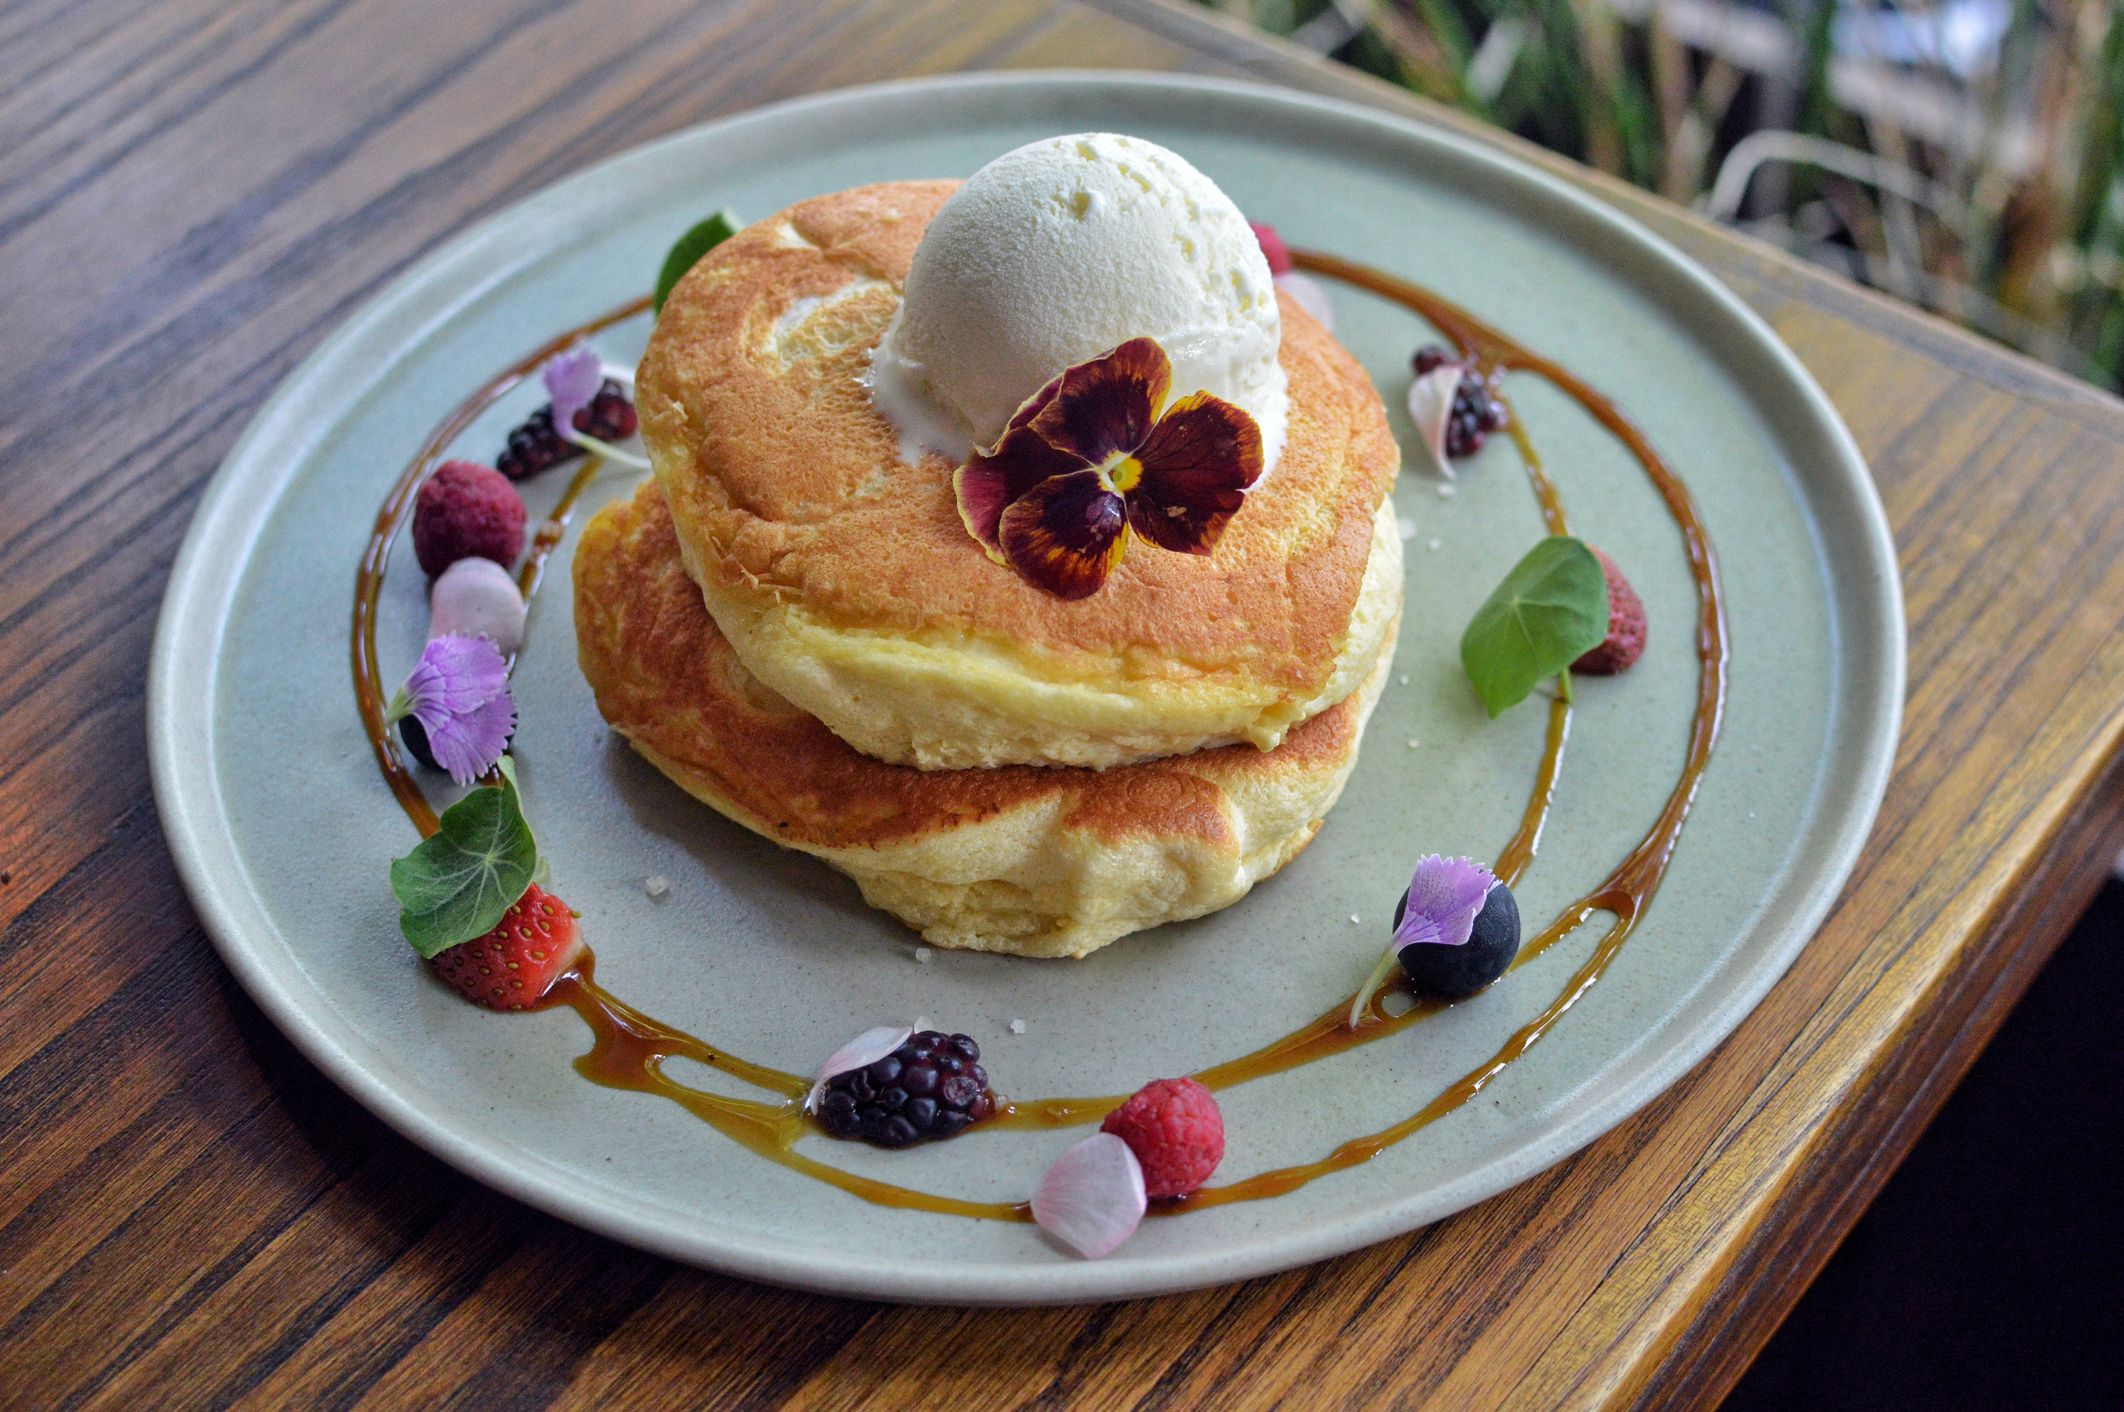 20 Best Pancake Toppings - What to Put on Pancakes